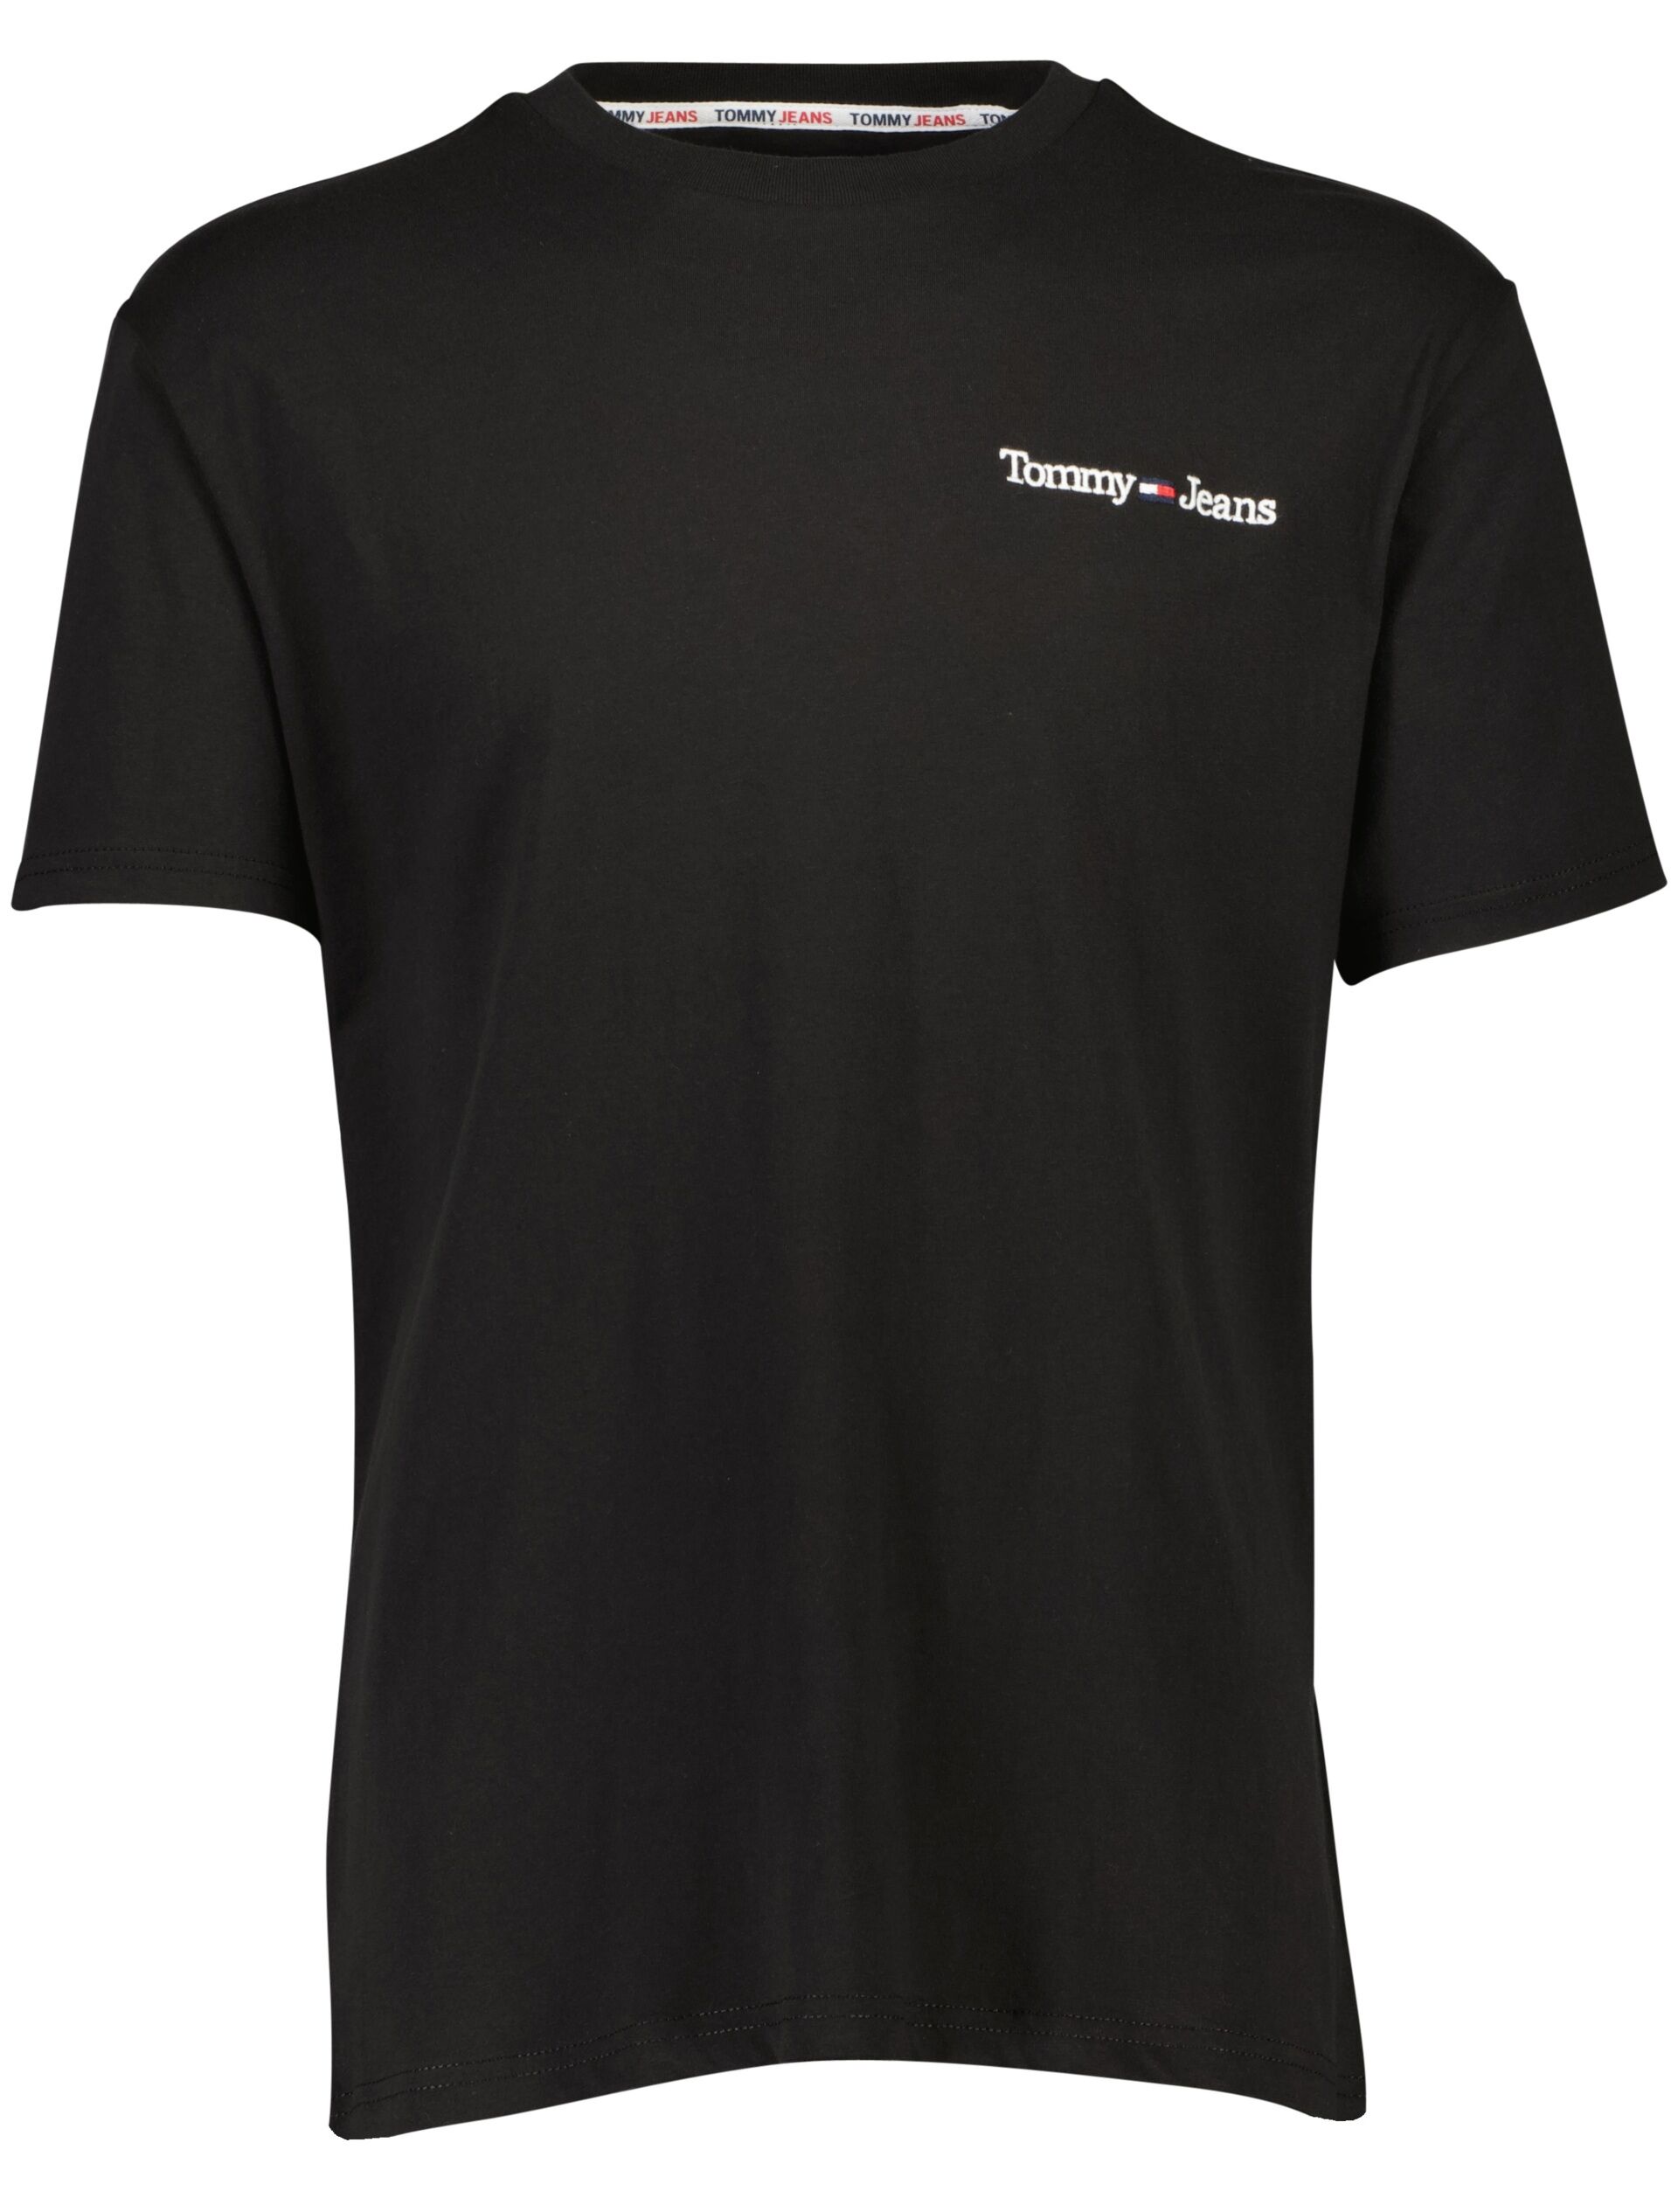 Tommy Jeans  T-shirt Sort 90-400924